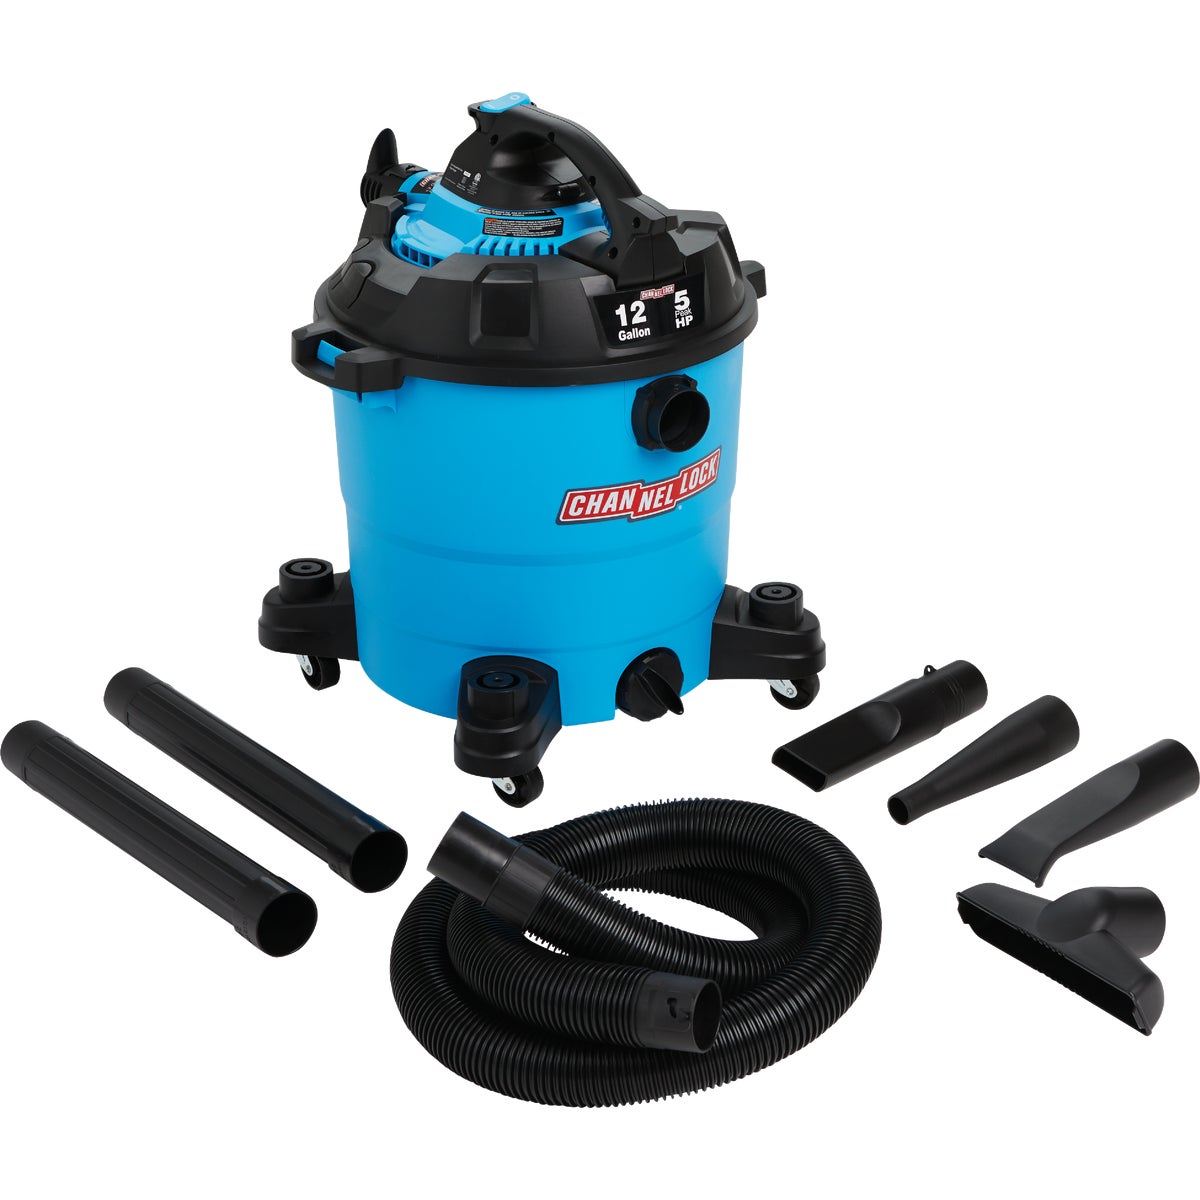 Channellock 12 Gal. 5.0-Peak HP Wet/Dry Vacuum with Blower